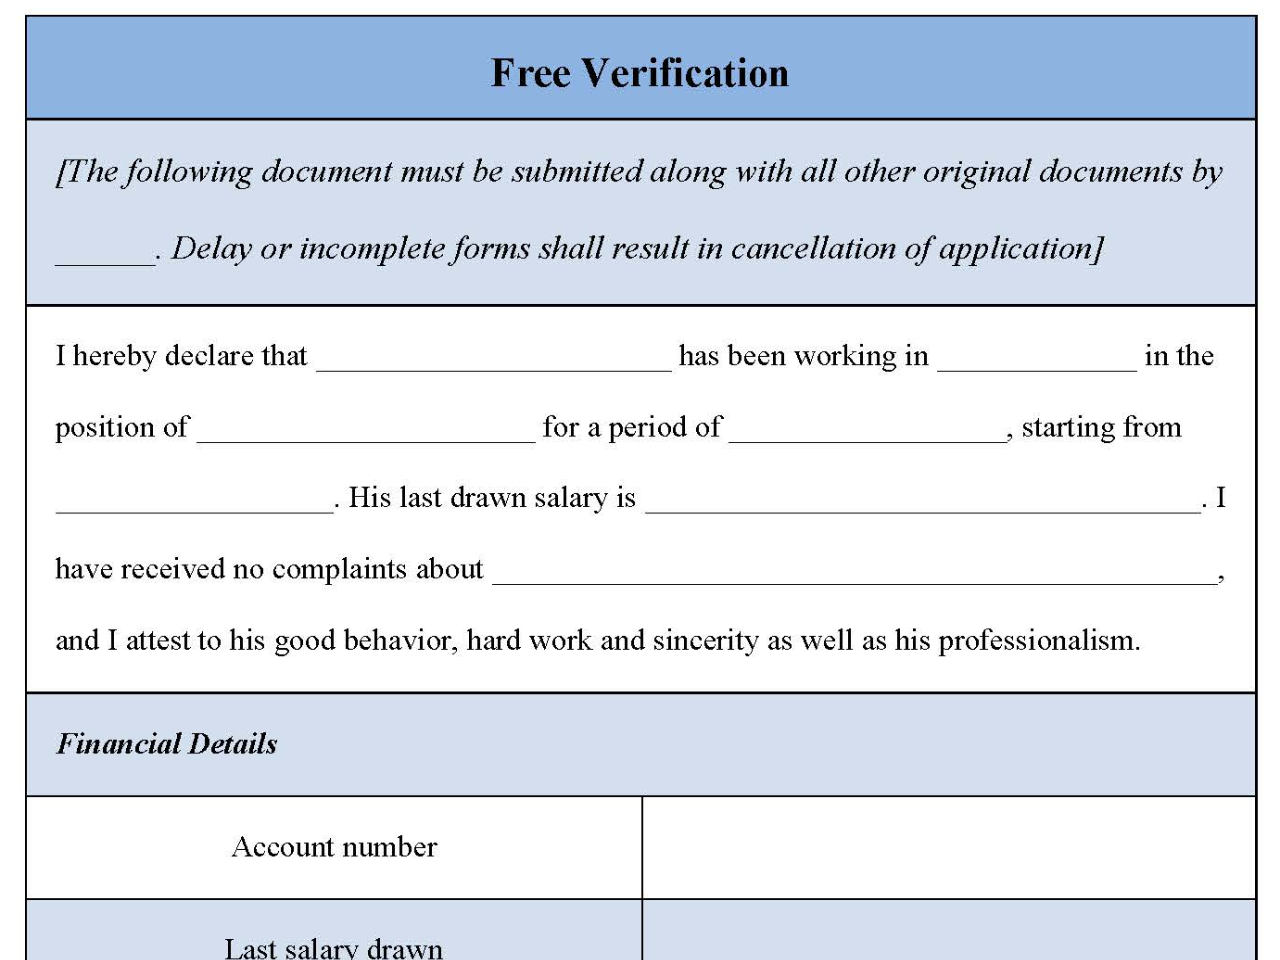 Free Verification Form